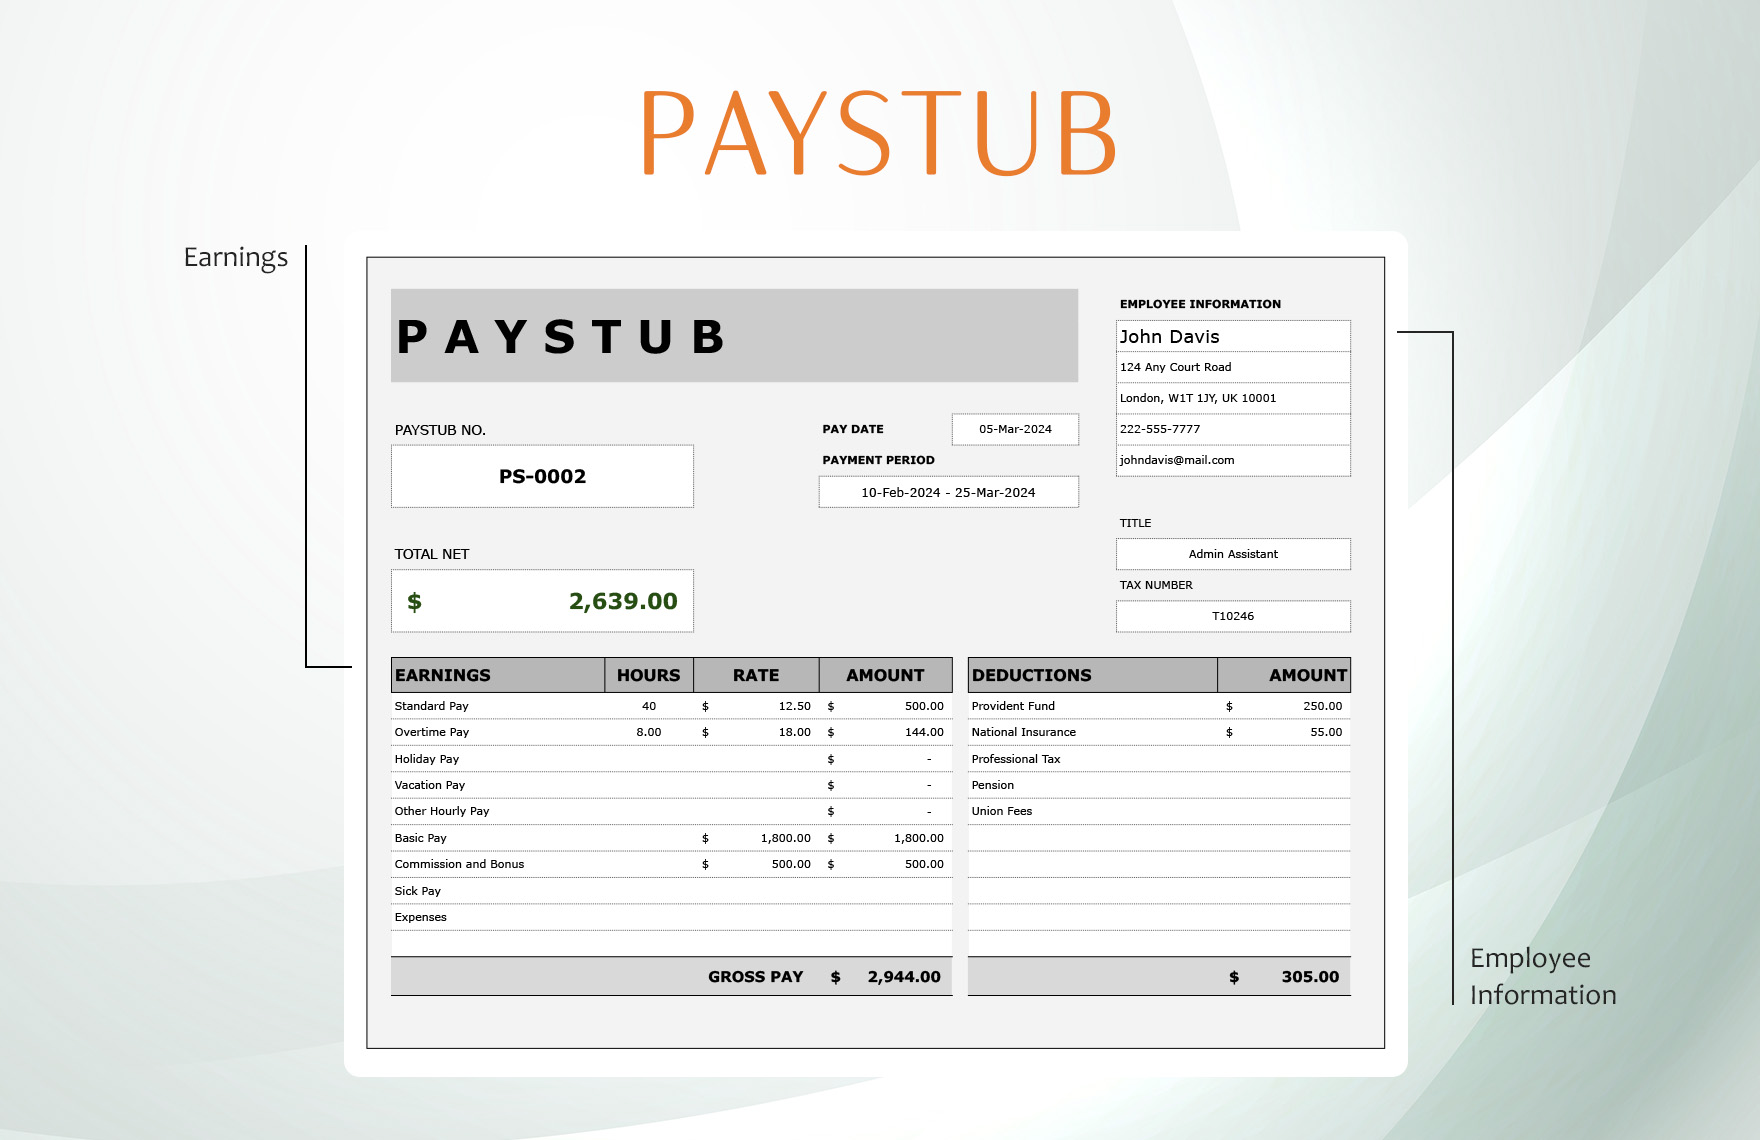 Payroll Check Paystub Template